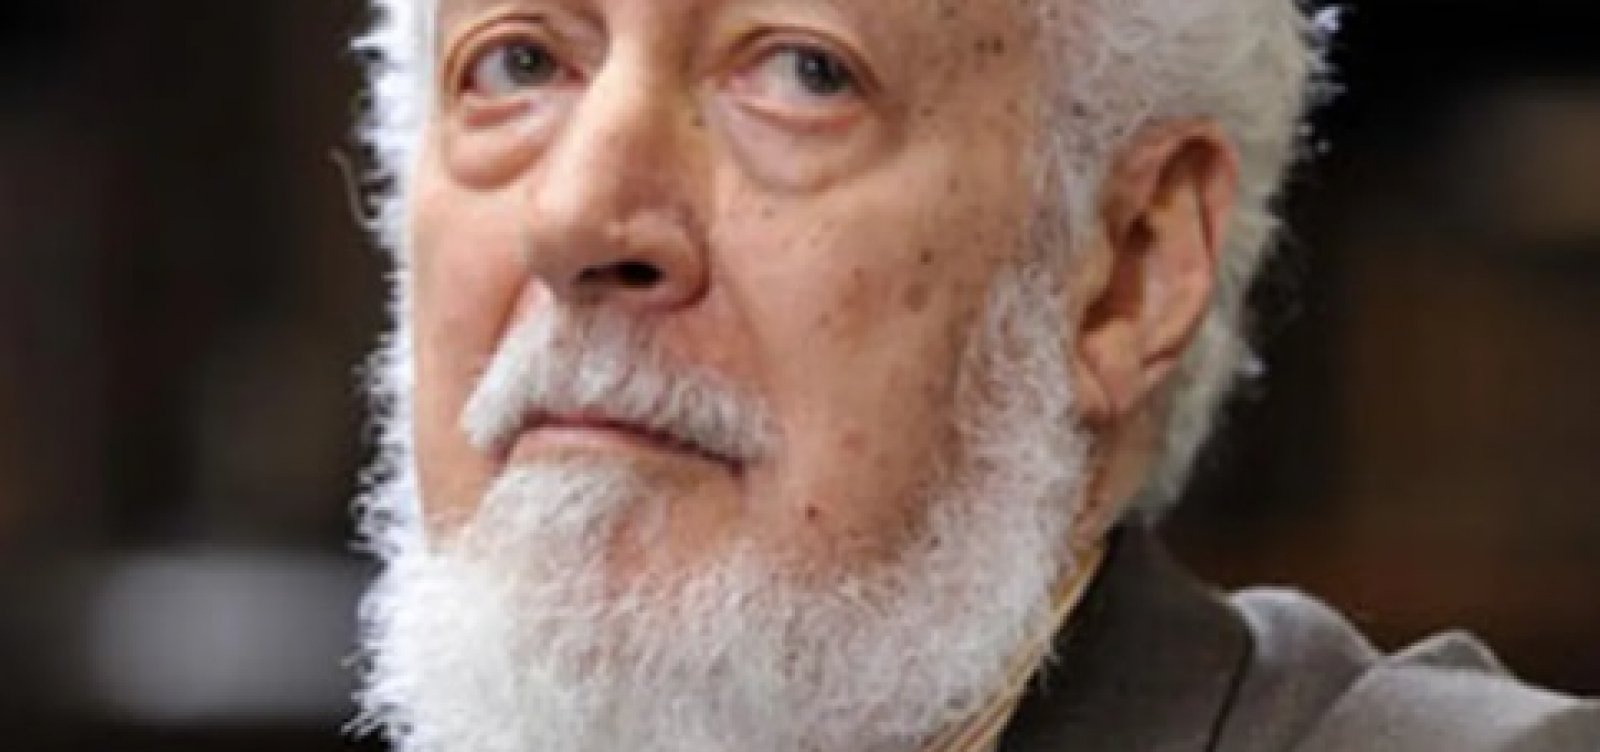 Morre no Rio, diplomata Alberto da Costa e Silva, poeta, acadêmico, membro da ABL